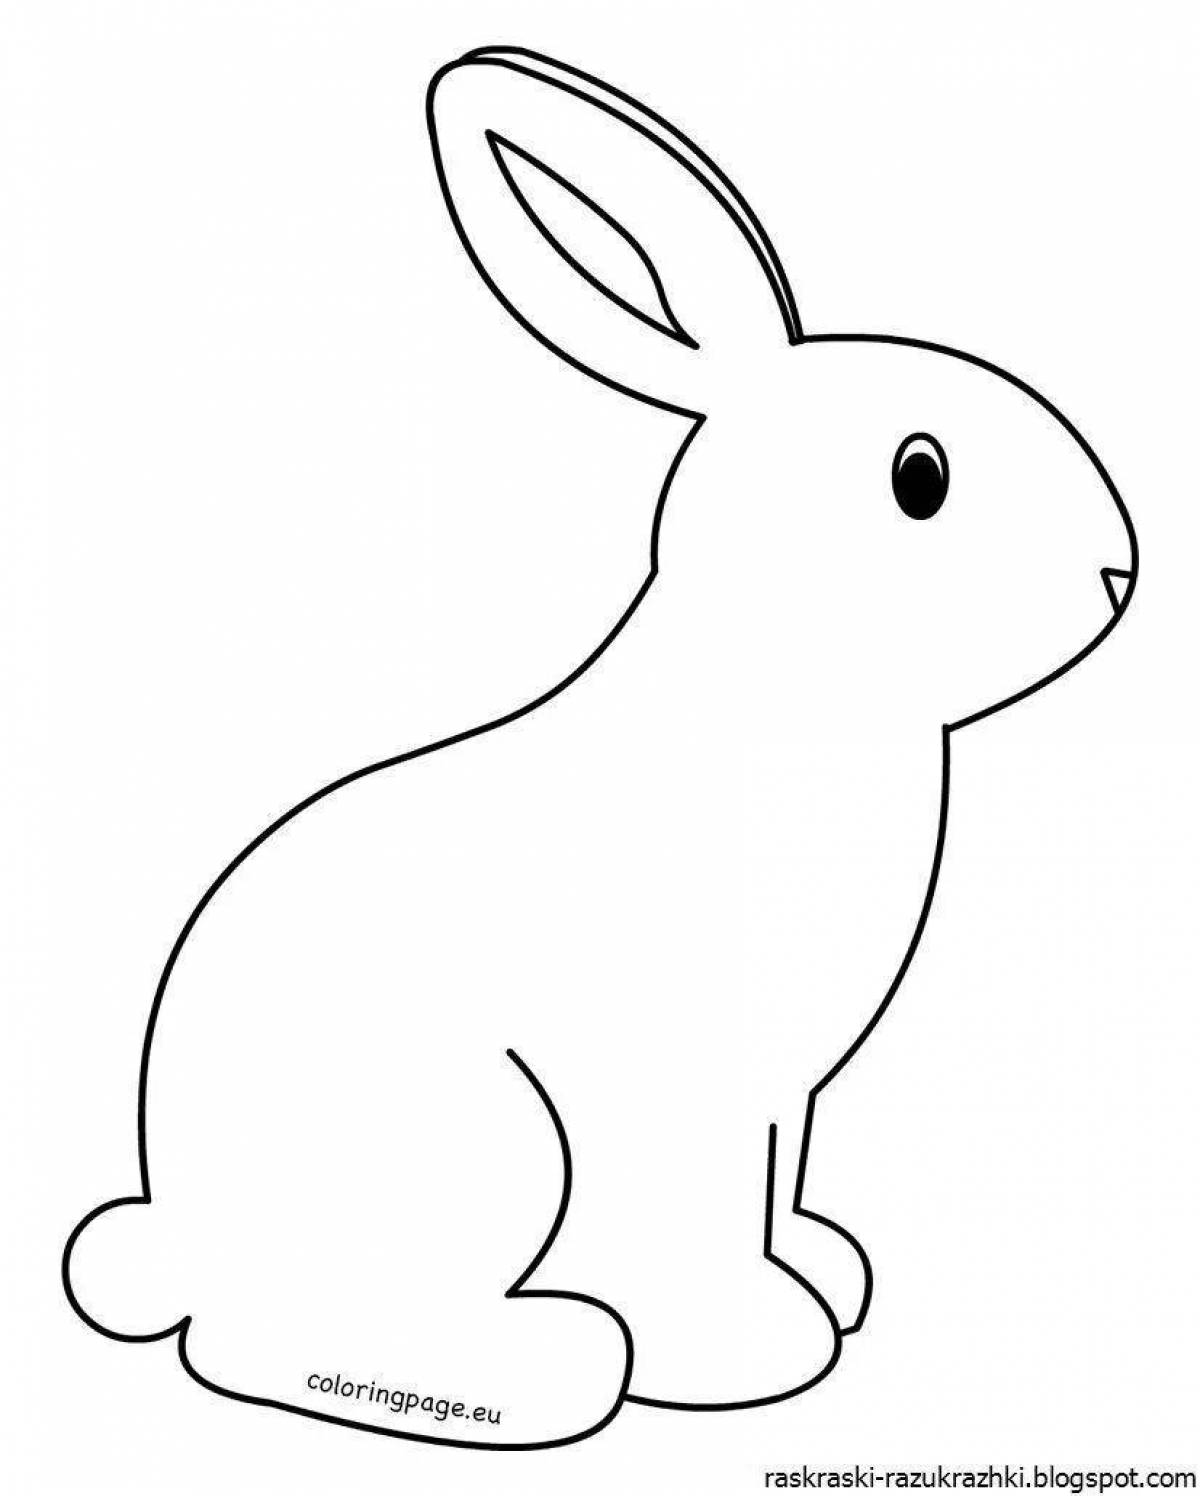 Coloring page shock bunny